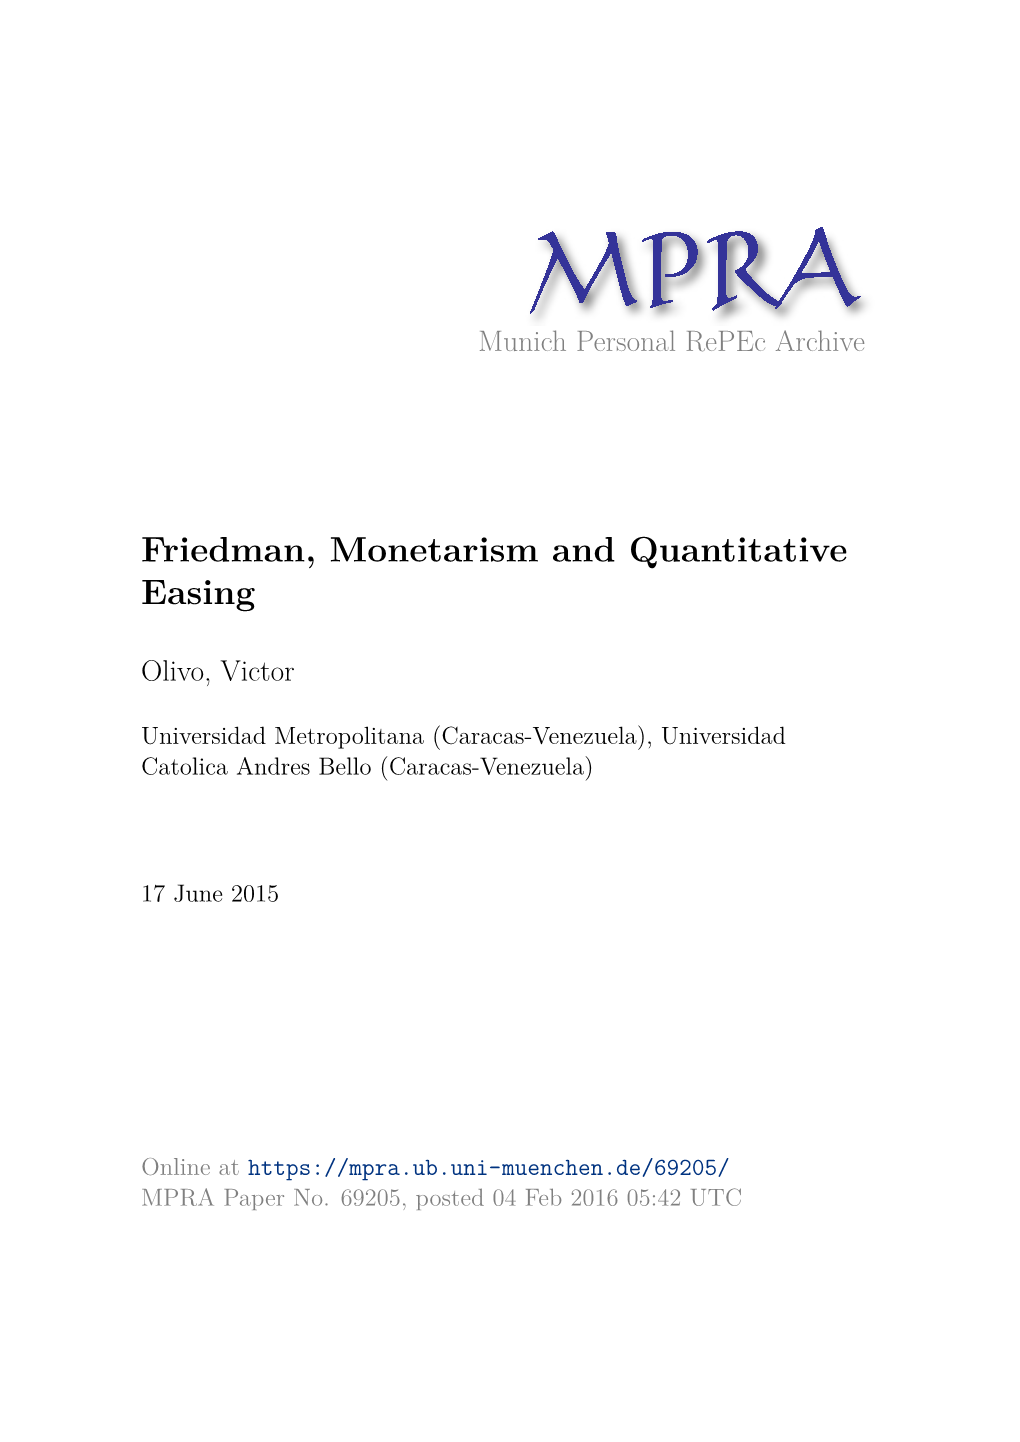 Friedman, Monetarism and Quantitative Easing